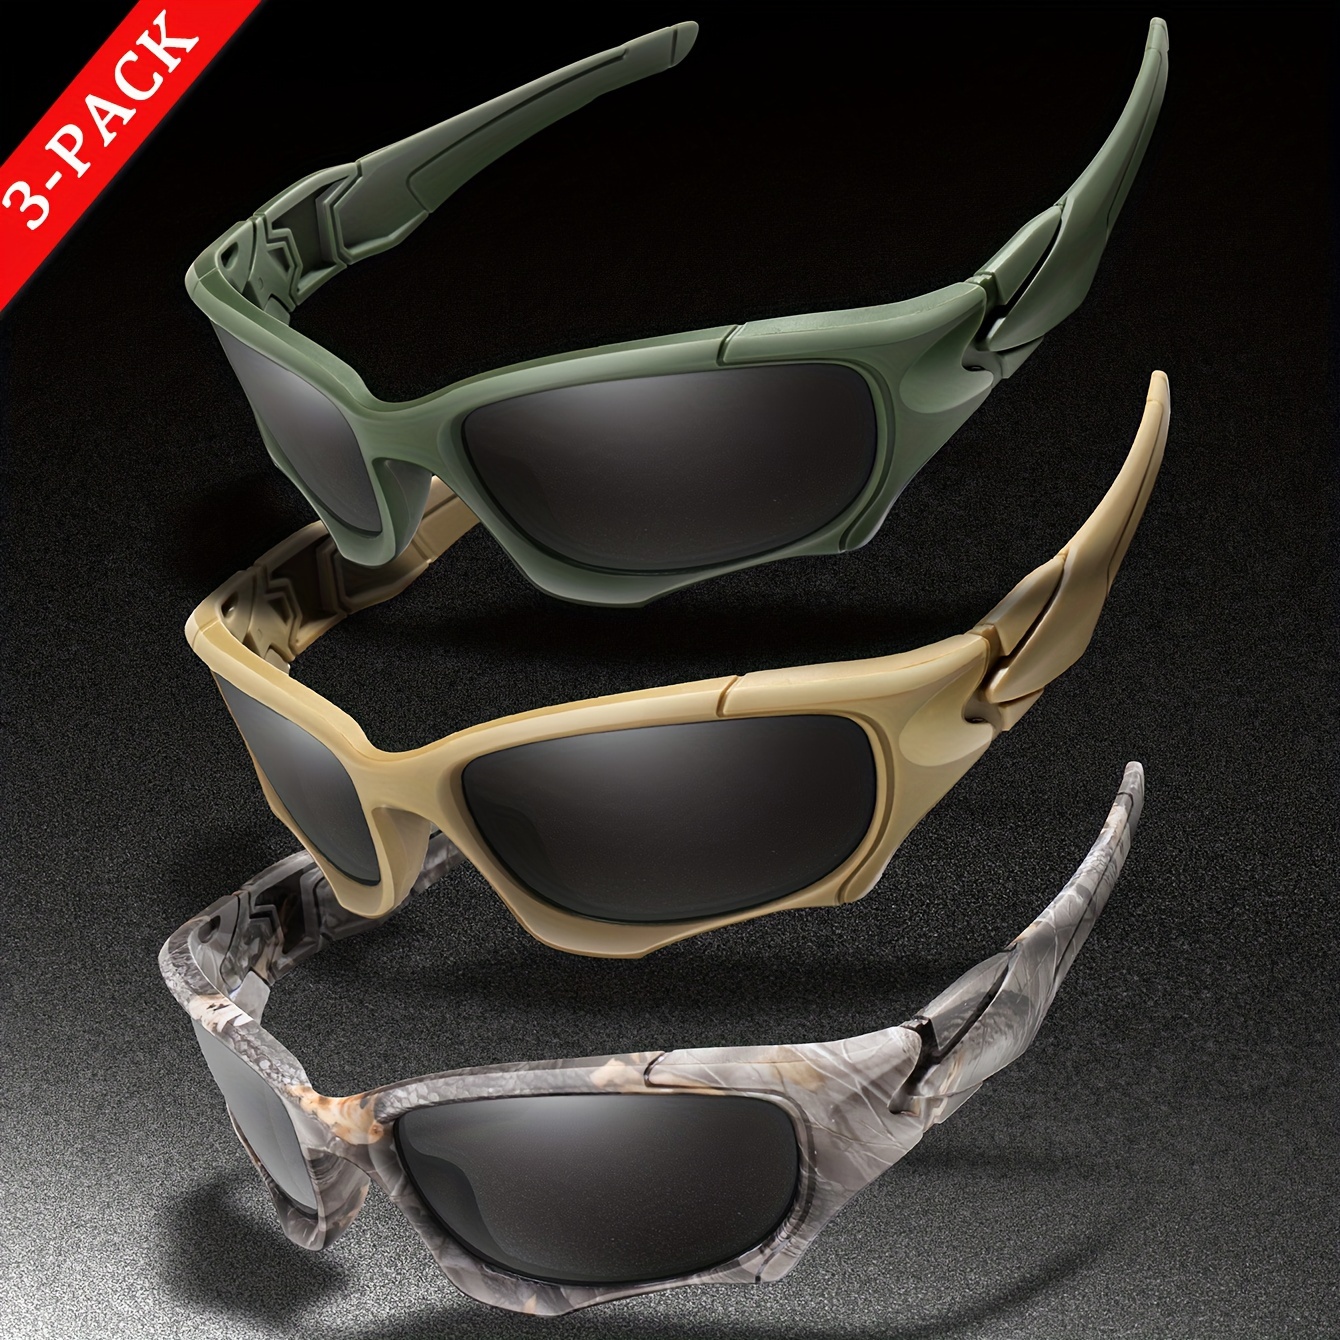  2 PACK Polarized Sports Sunglasses For Men Driving